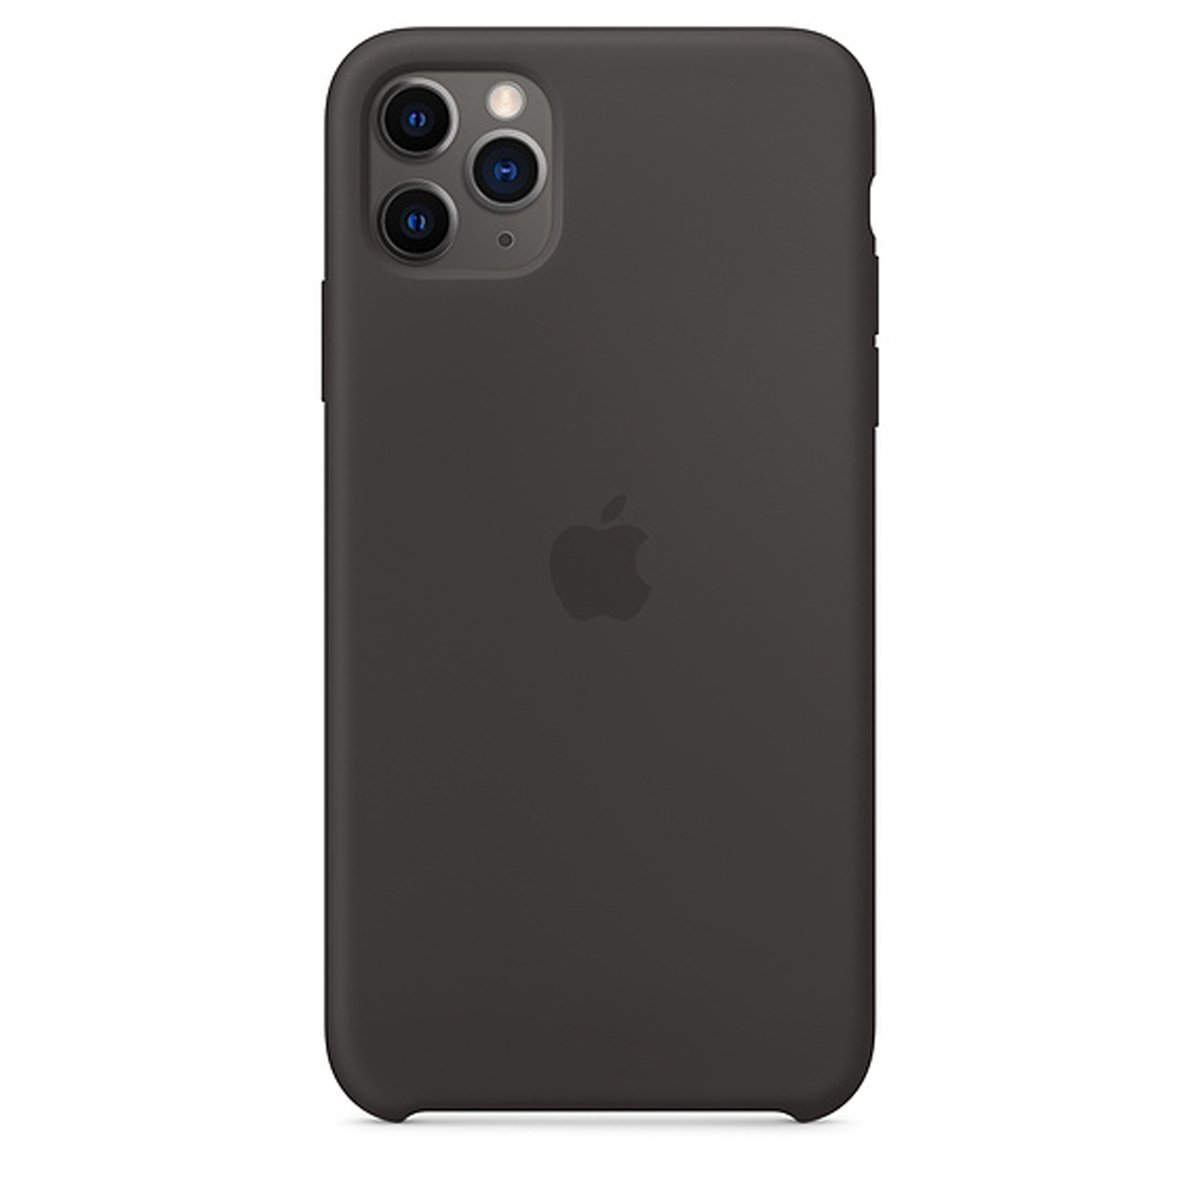 ابل غطاء جوال ايفون 11 برو ماكس سليكون سوداء MX002ZM